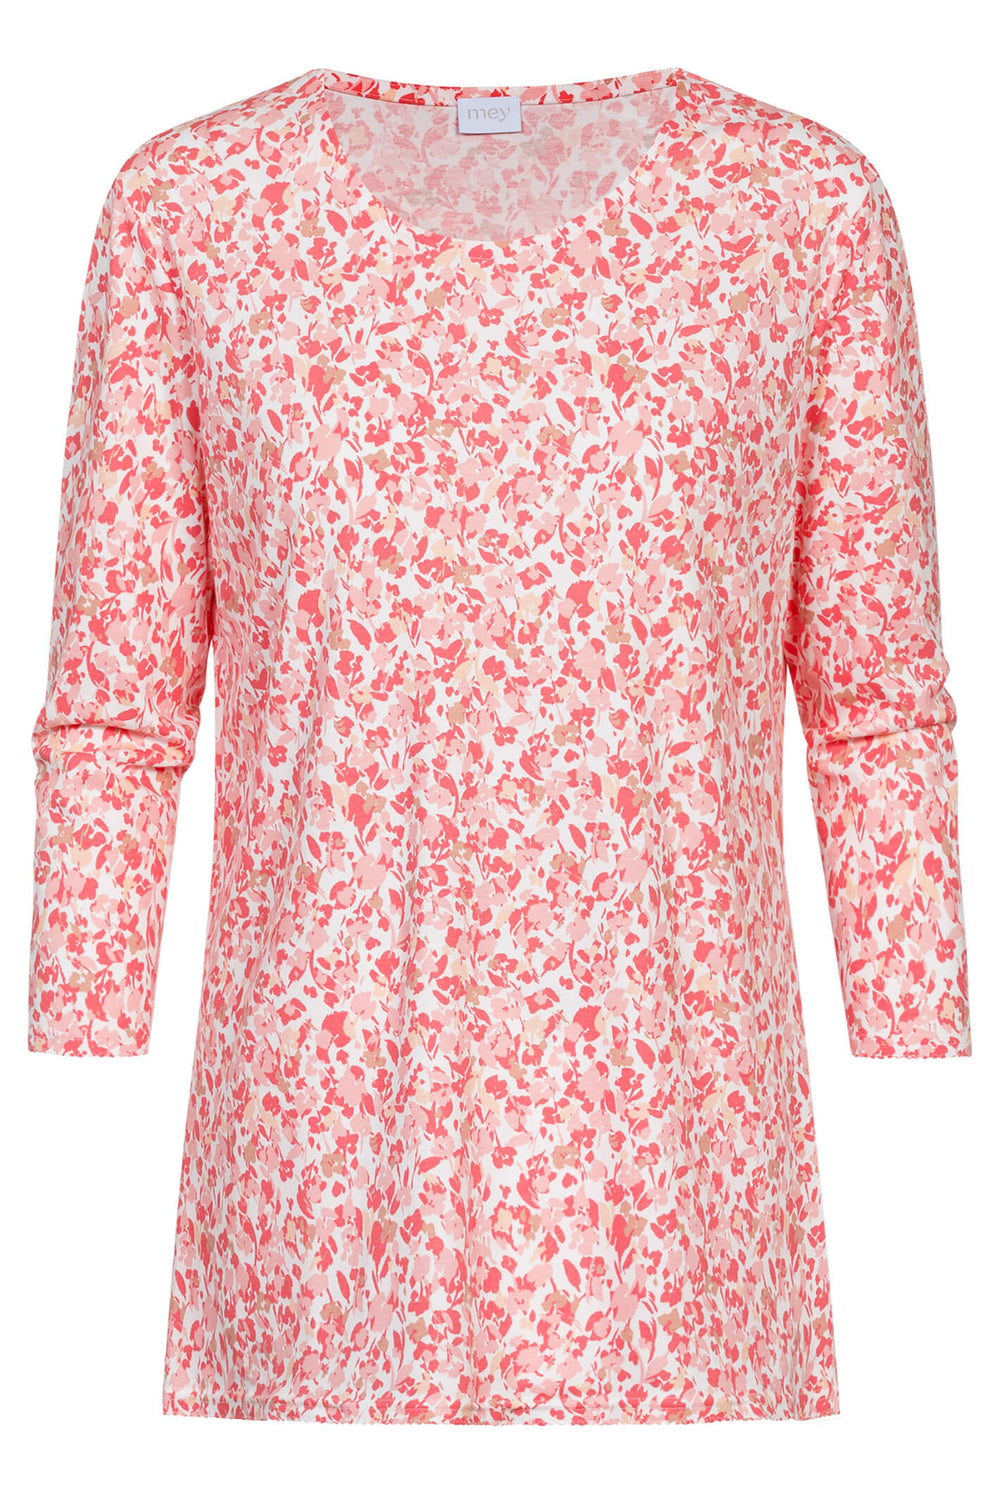 Mey 13196 794 Petal Pink Print Top Pyjama Set - Shirley Allum Boutique